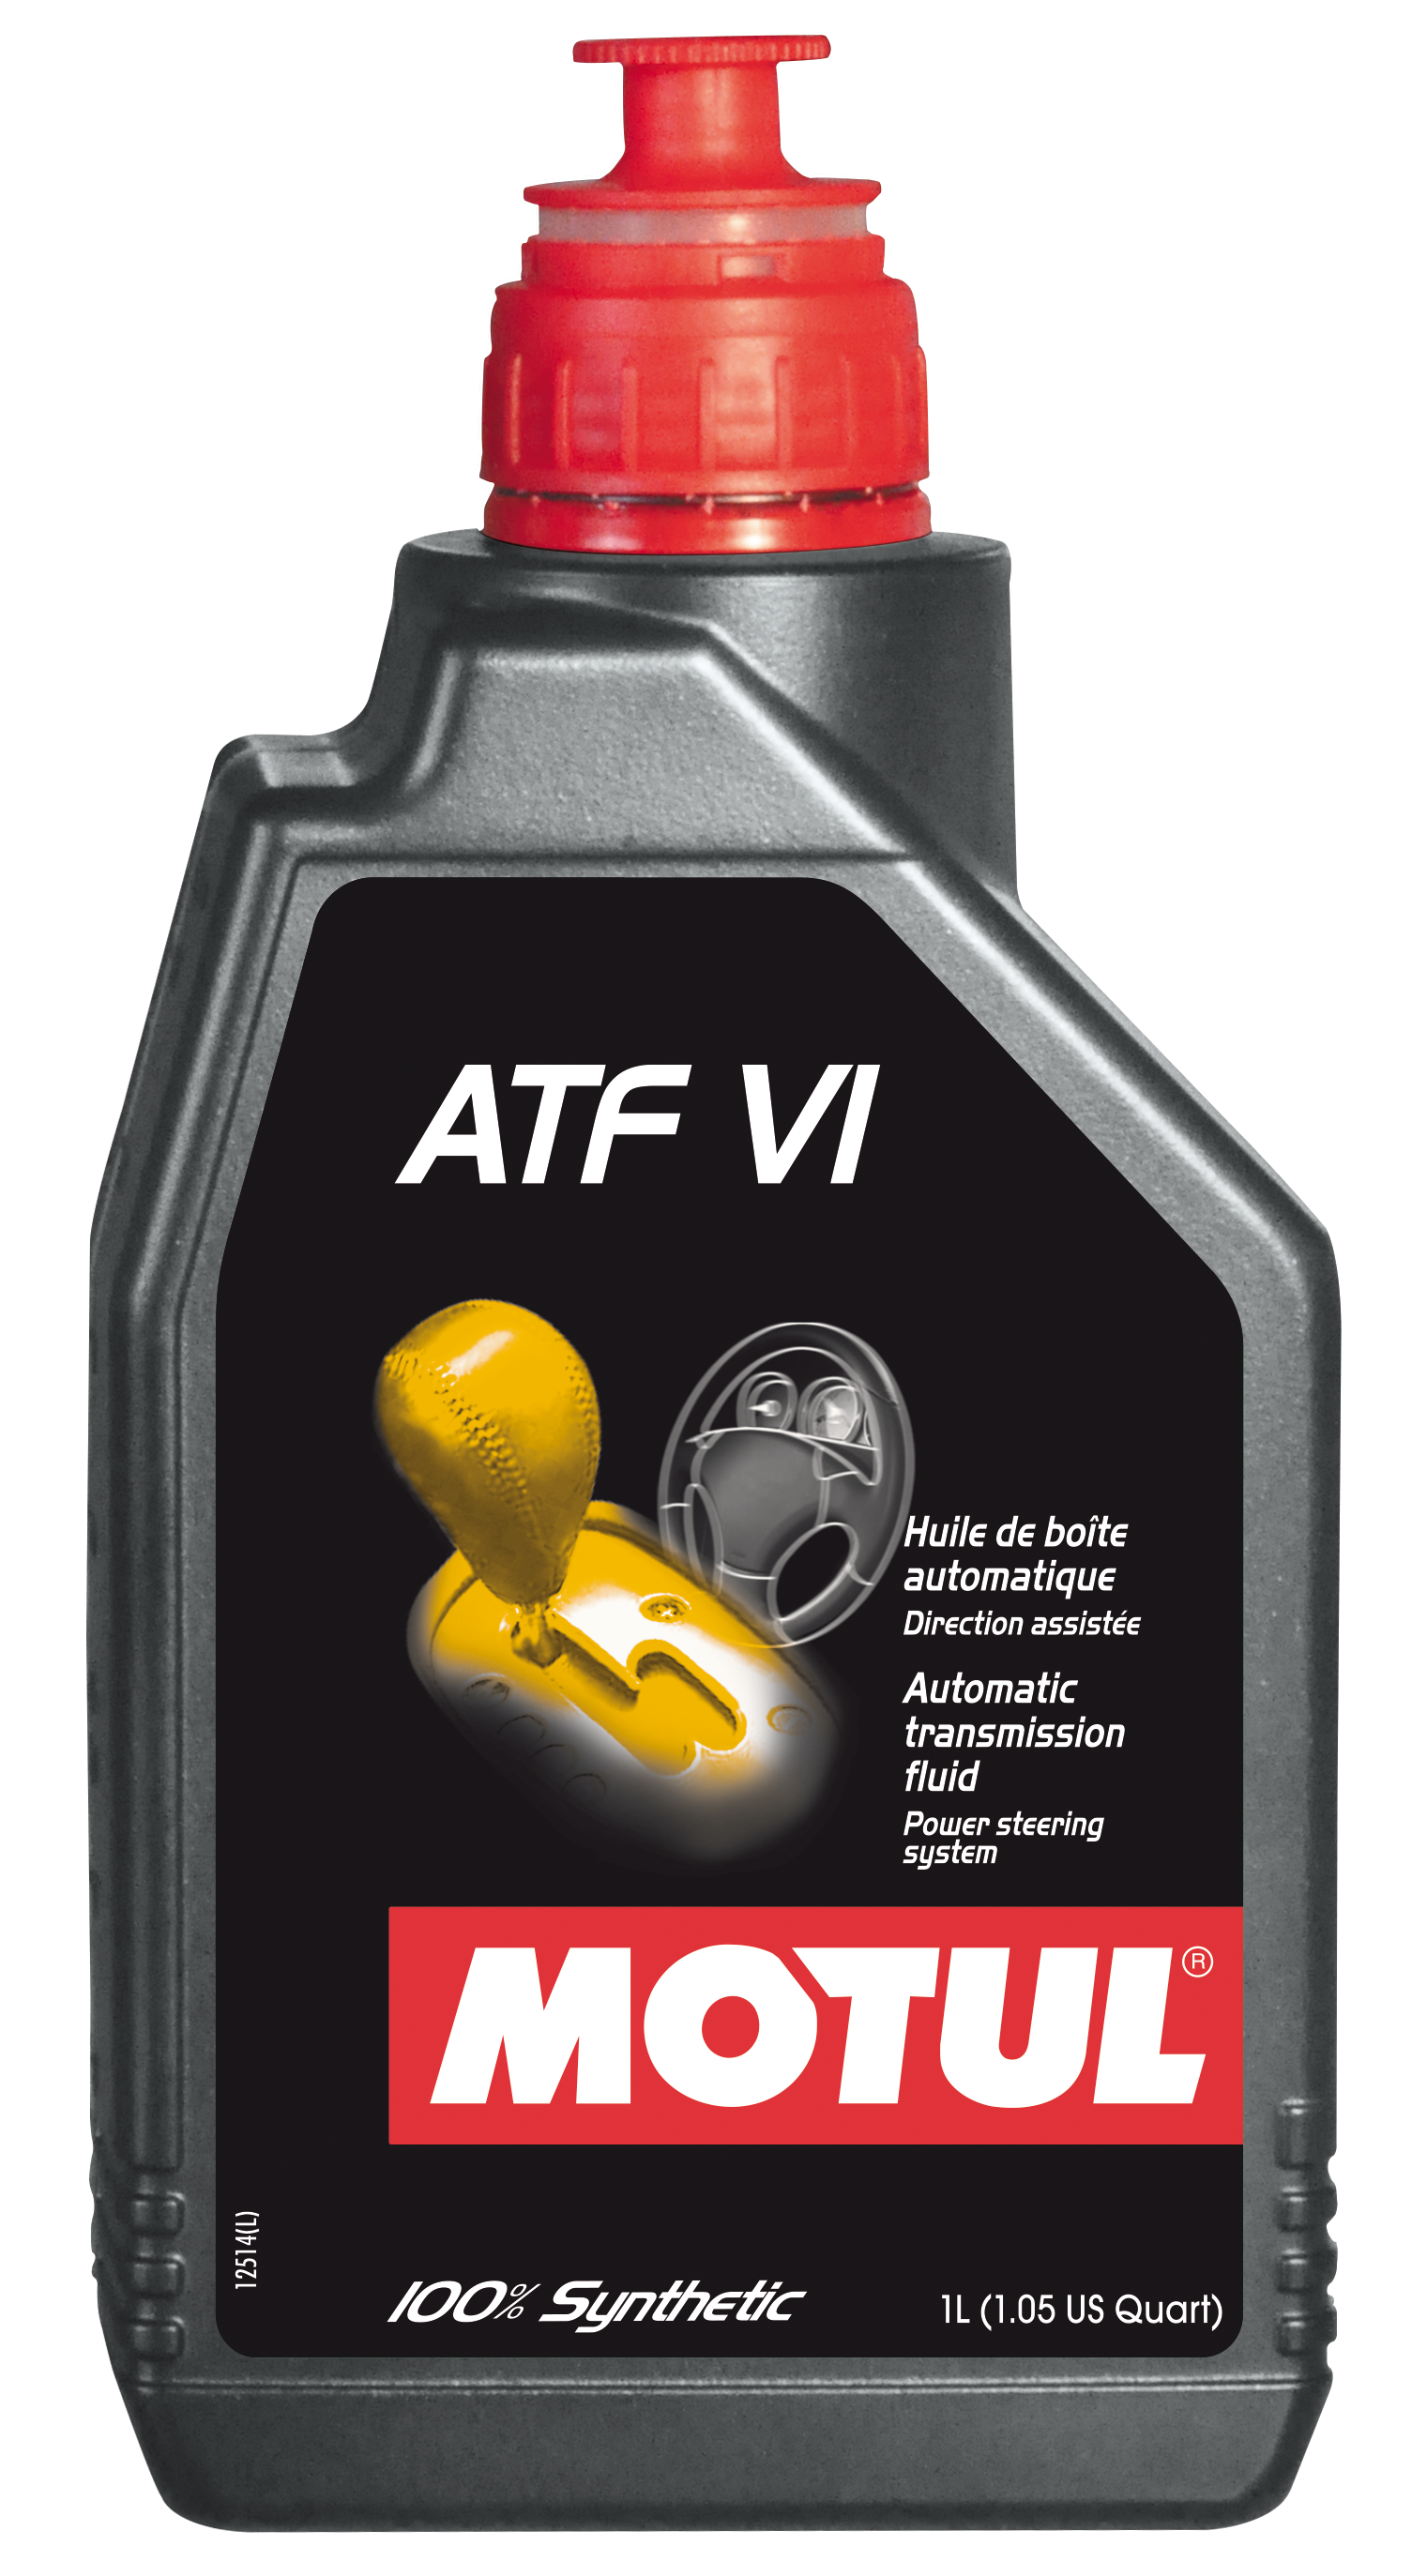 MOTUL ATF VI - 1L - Fully Synthetic Transmission fluid